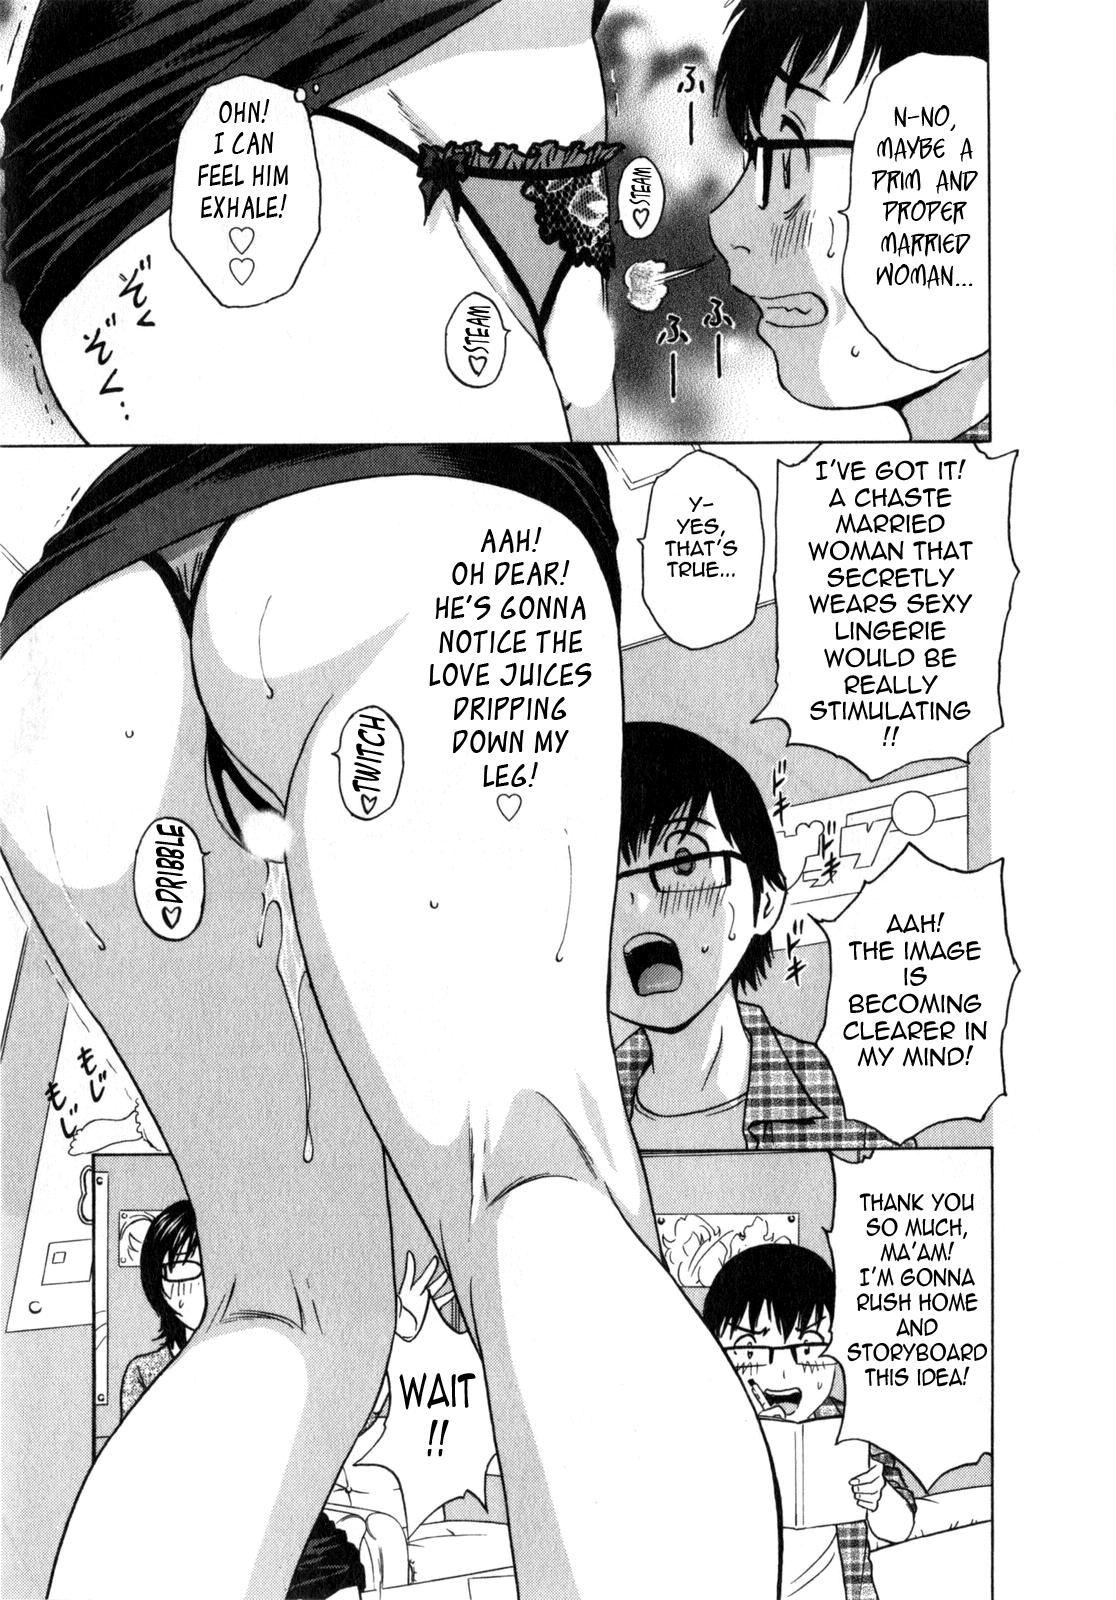 [Hidemaru] Life with Married Women Just Like a Manga 1 - Ch. 1-9 [English] {Tadanohito} 167